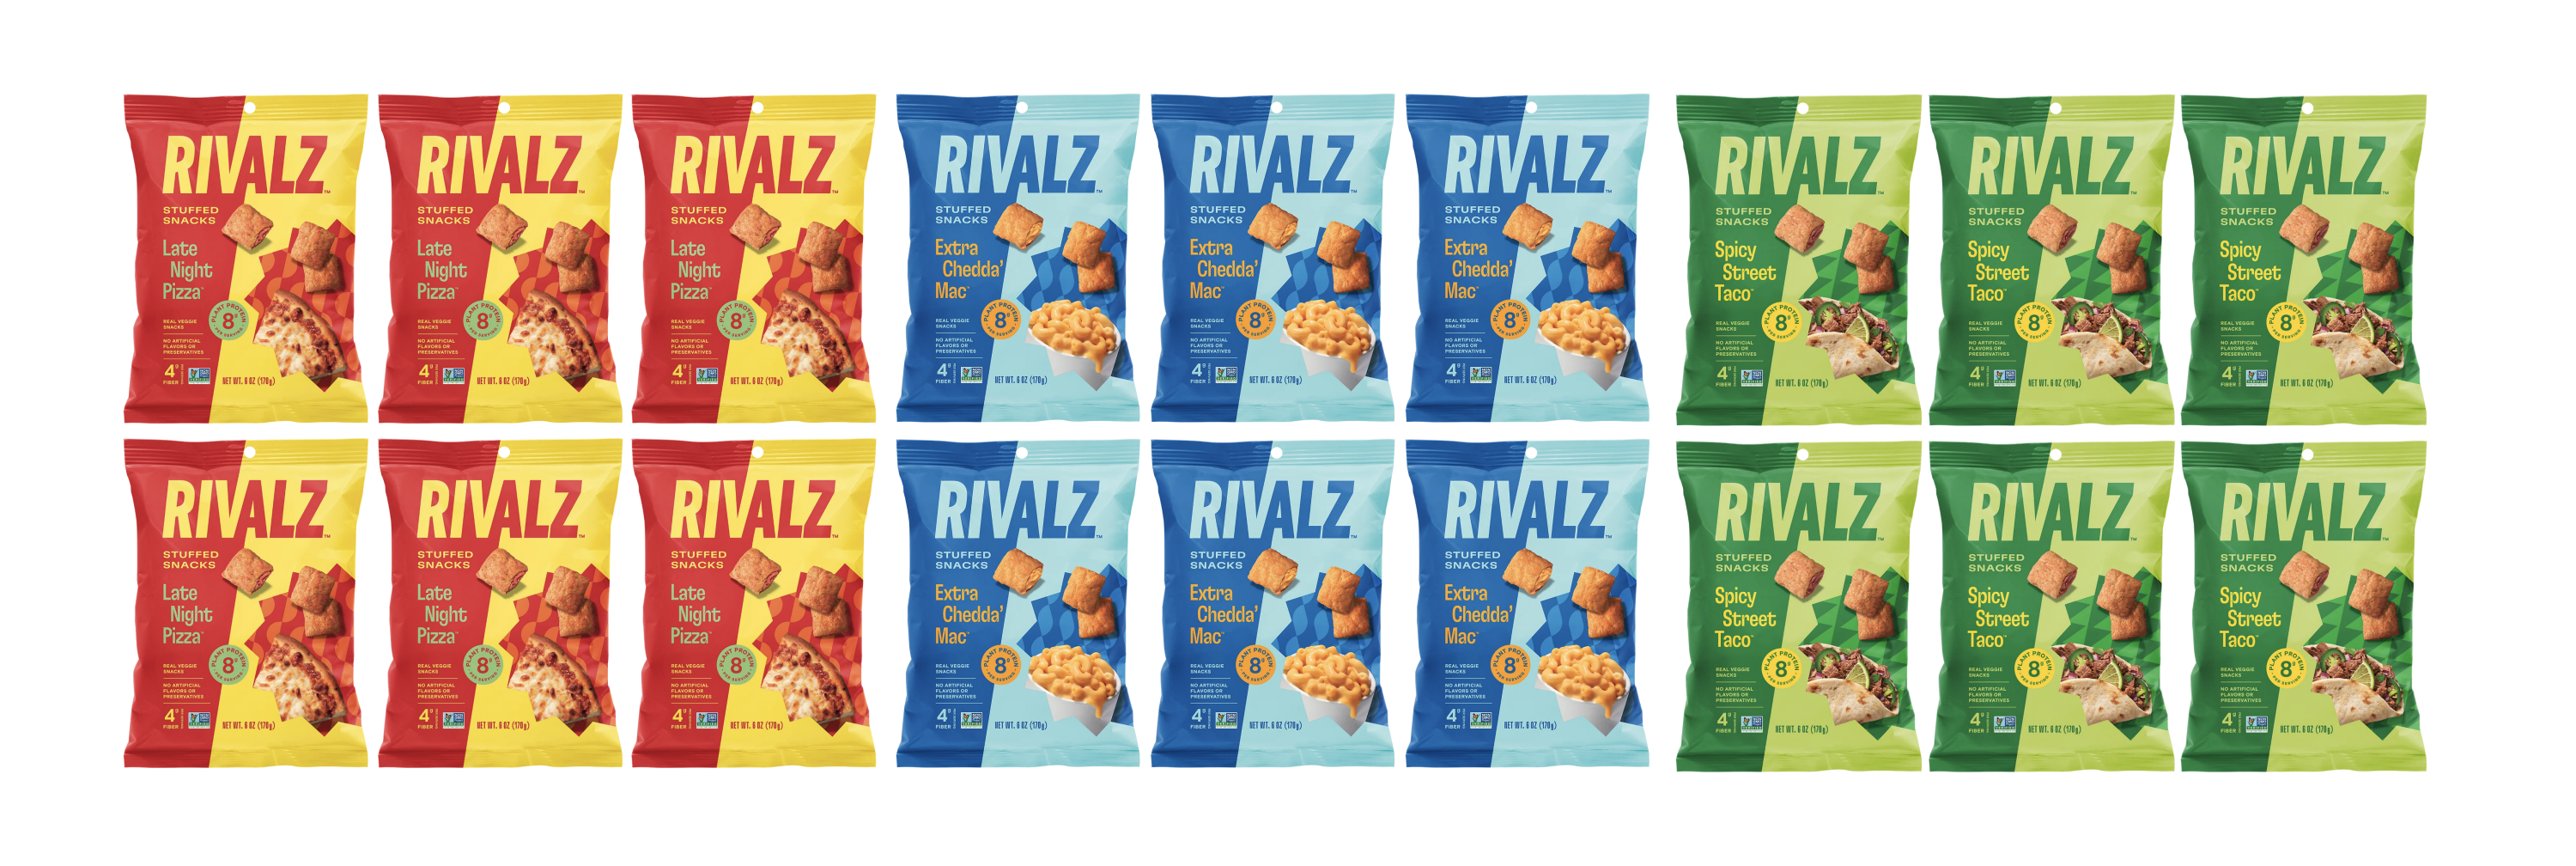 Stuffed Protein Snacks by Rivalz Snacks - Variety Pack